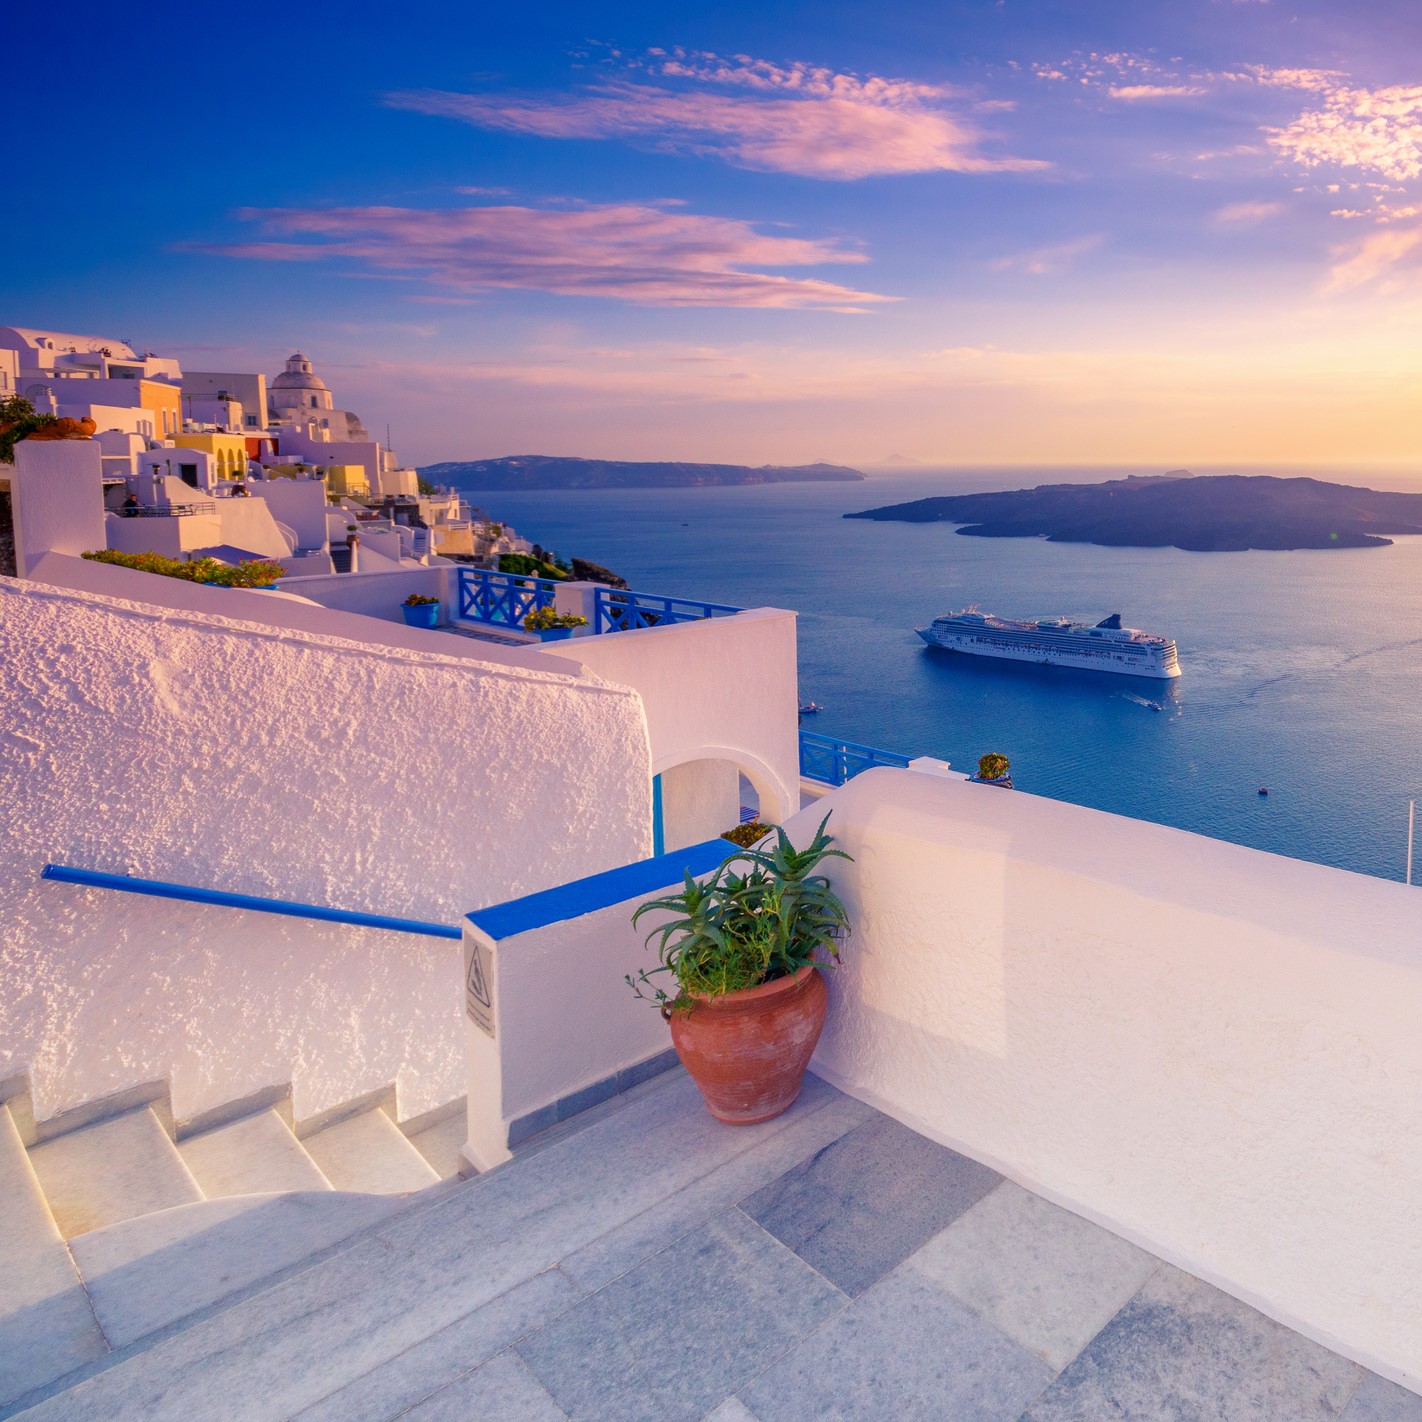 11-night Greece, Turkey & Cypress summer cruise from $829